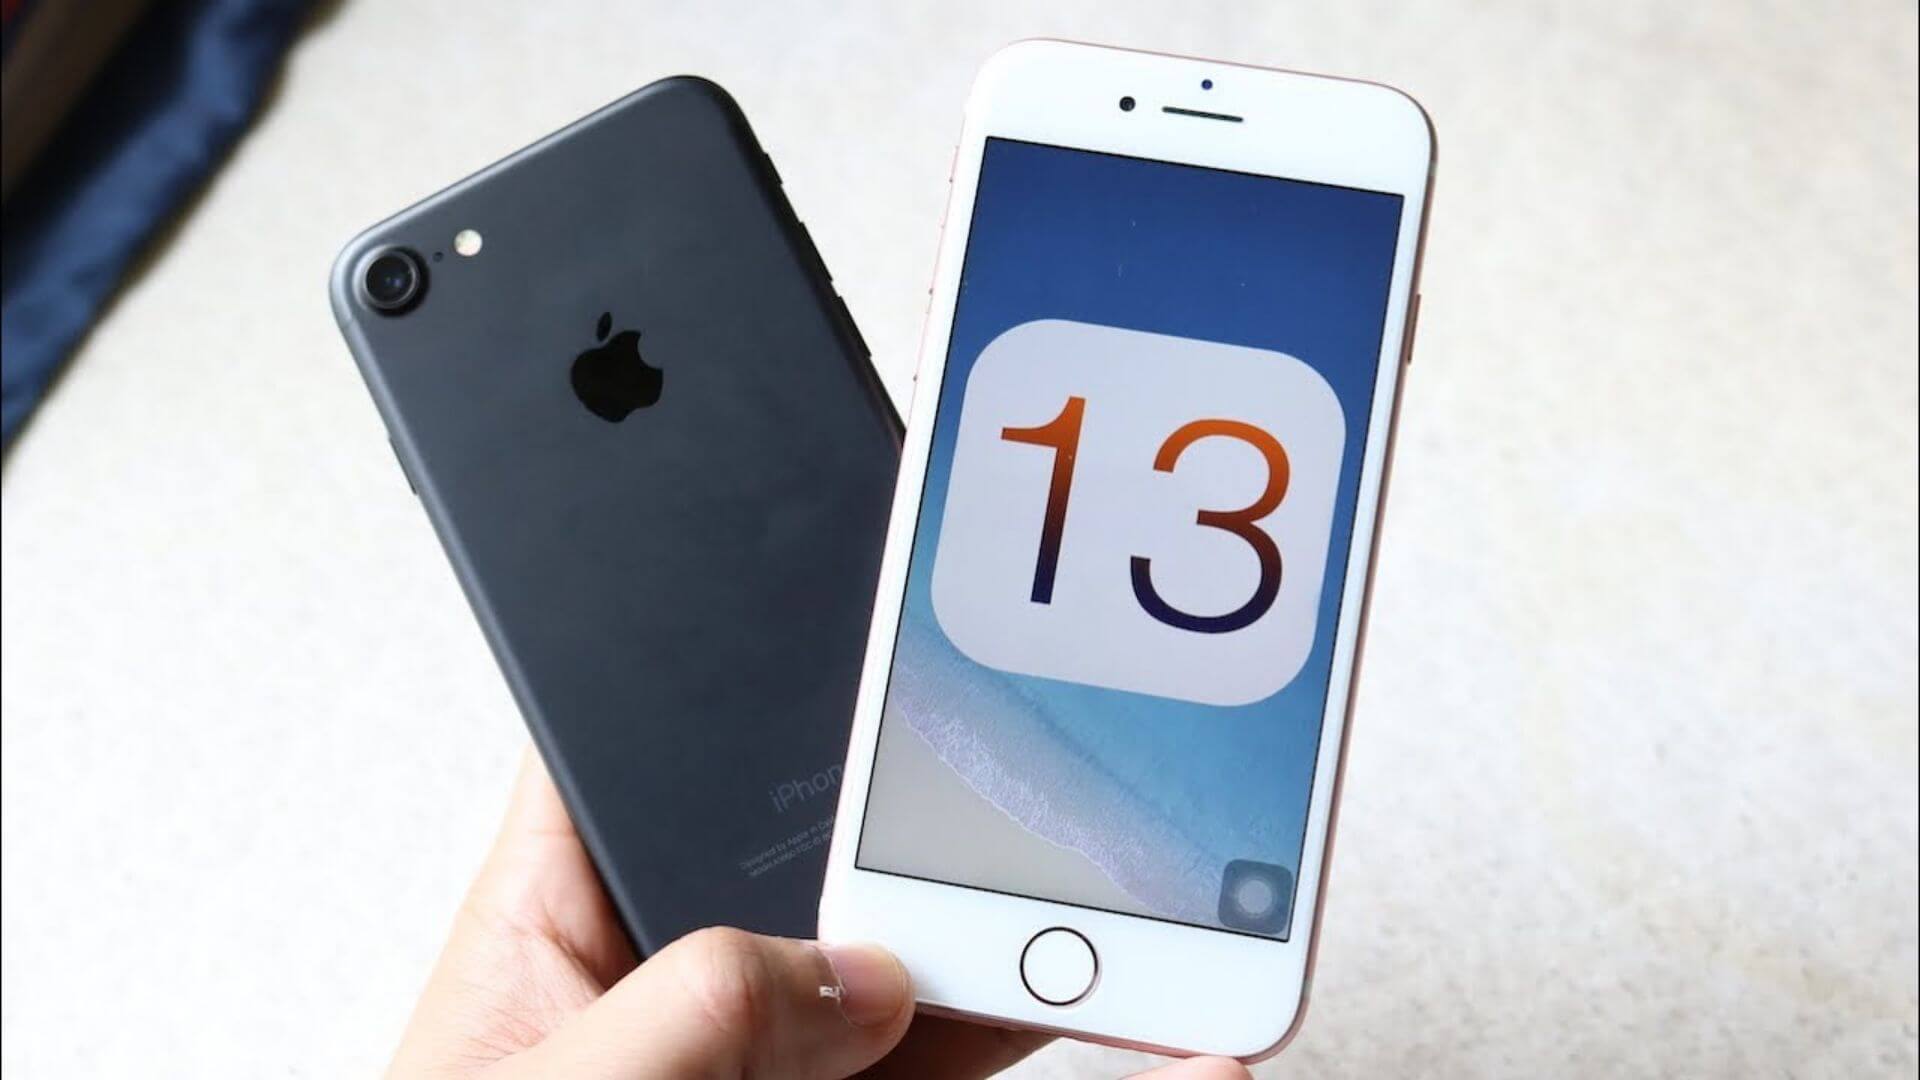 iOS 13 on the iPhone 7